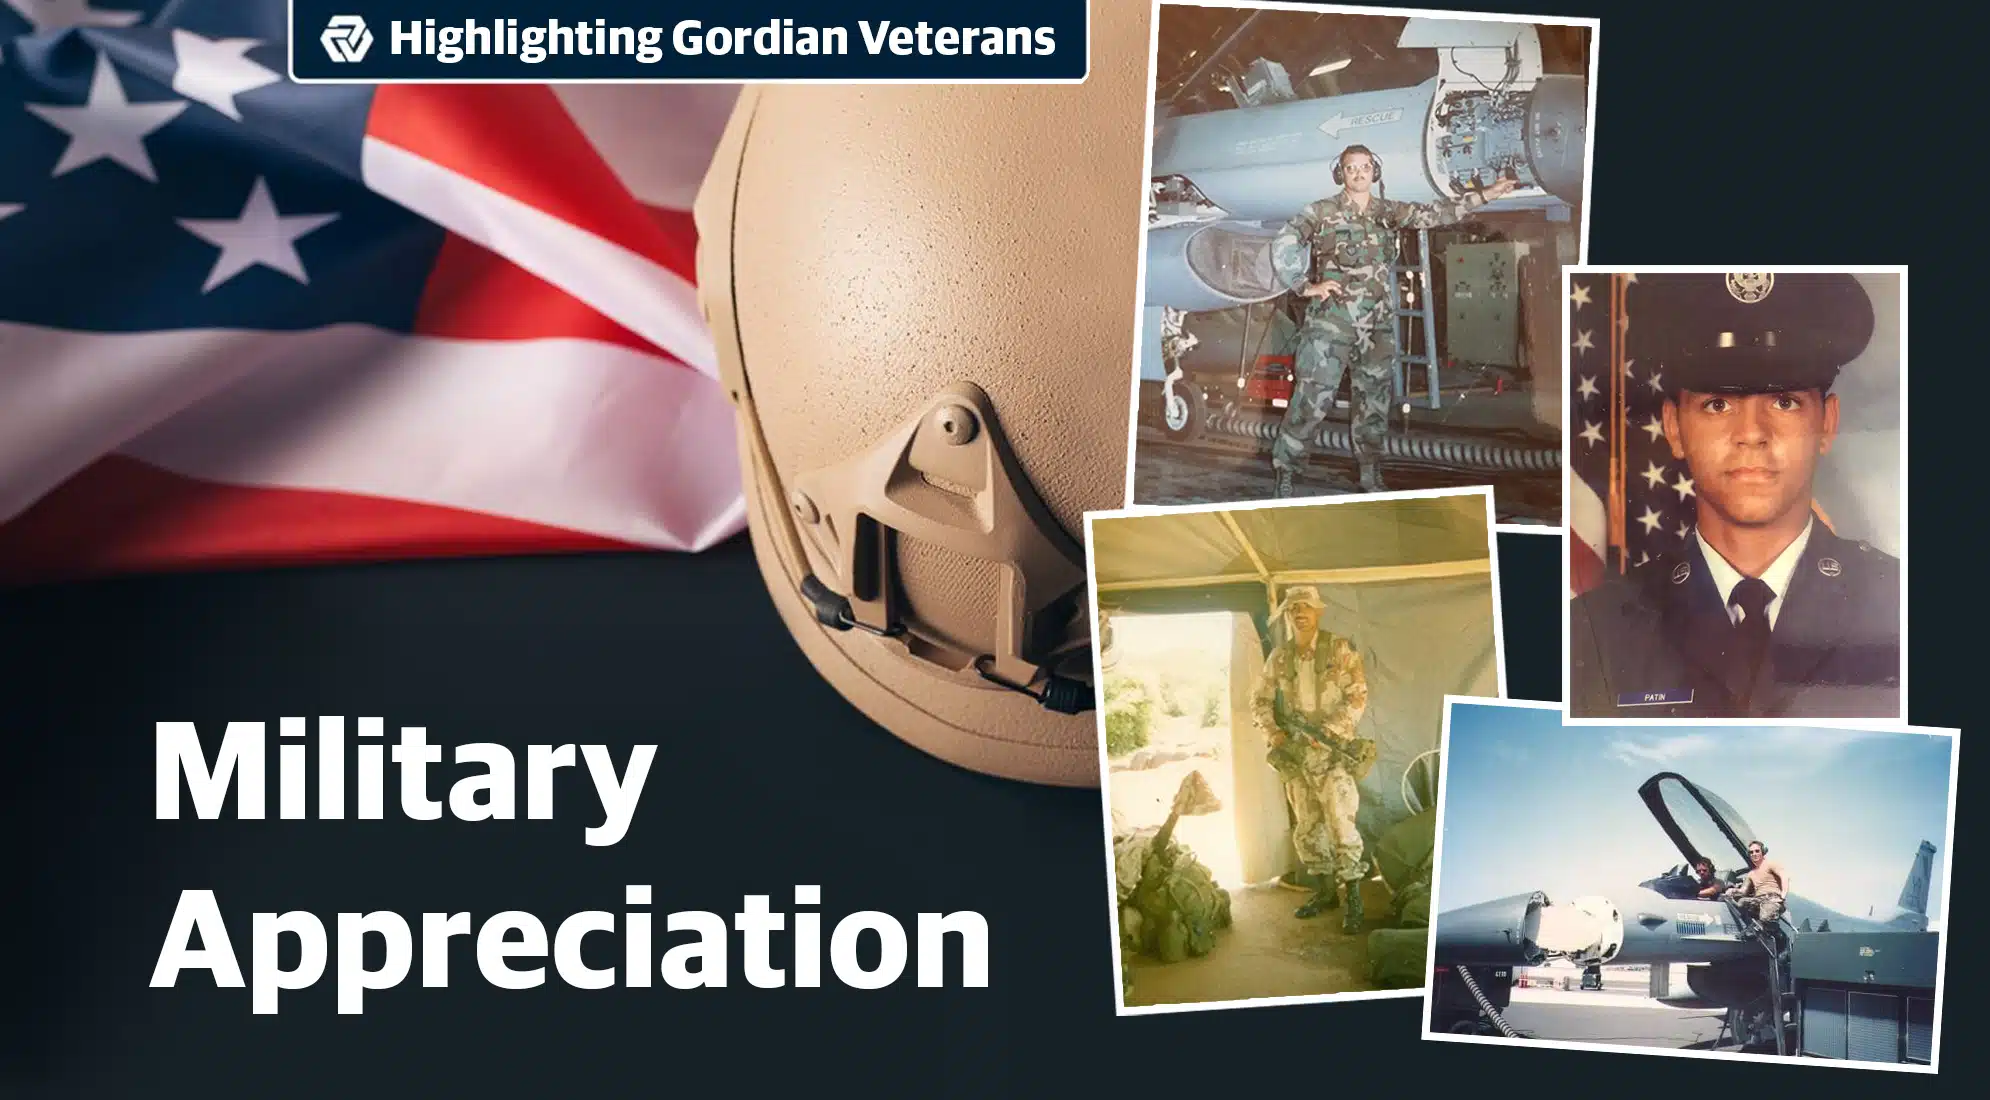 Military Appreciation at Gordian